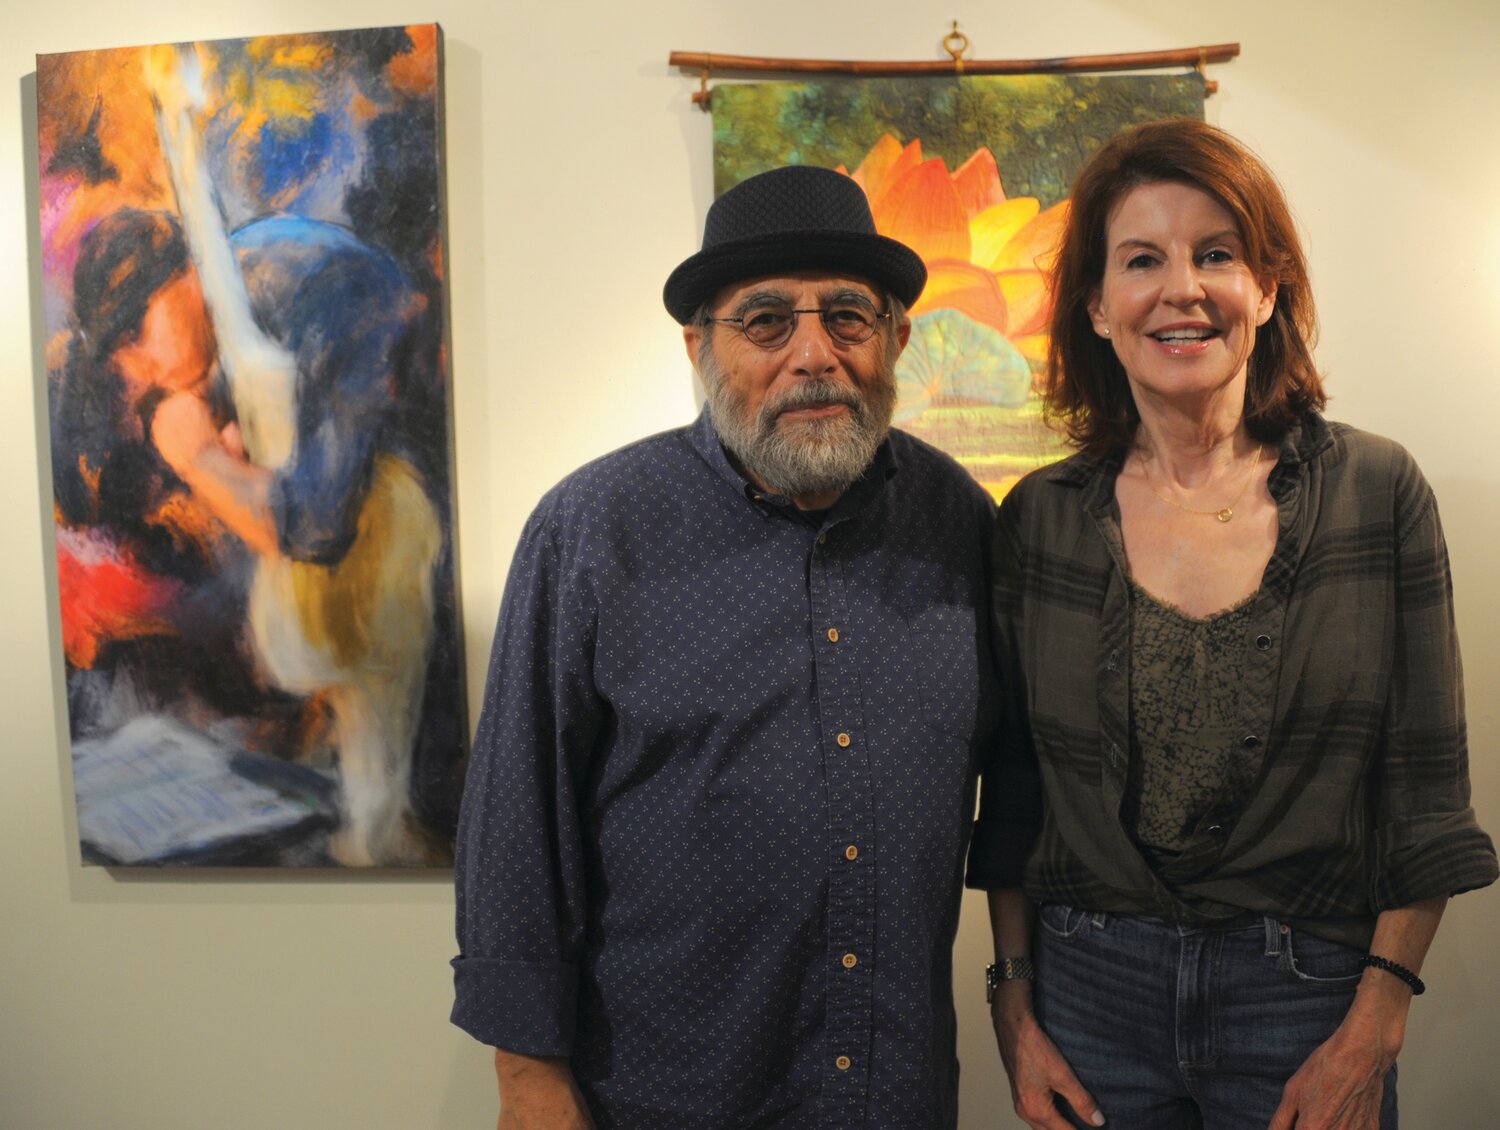 Artist Joseph Schembri with his work, “The Bottom Line,” and Lynne Brennan.